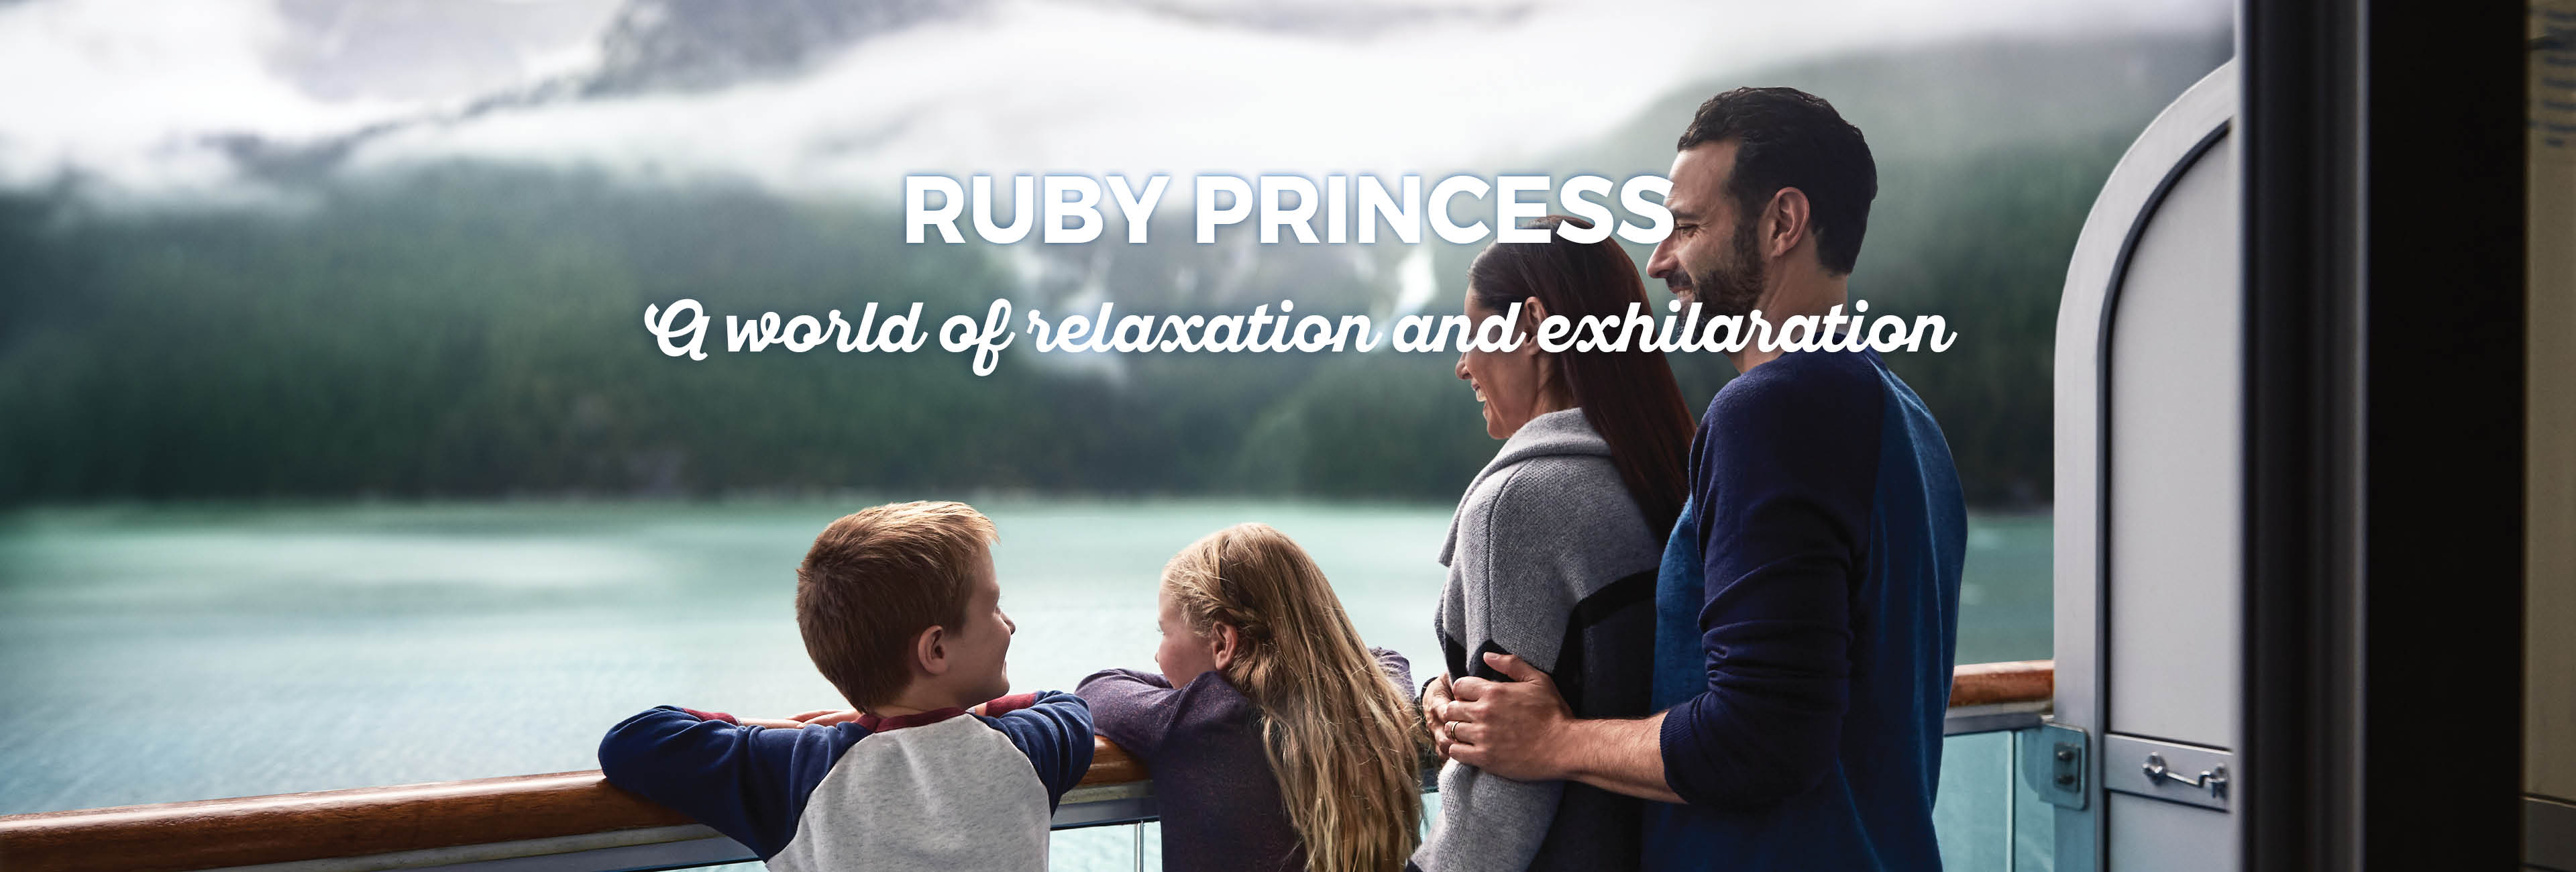 ruby-princess-1.jpg